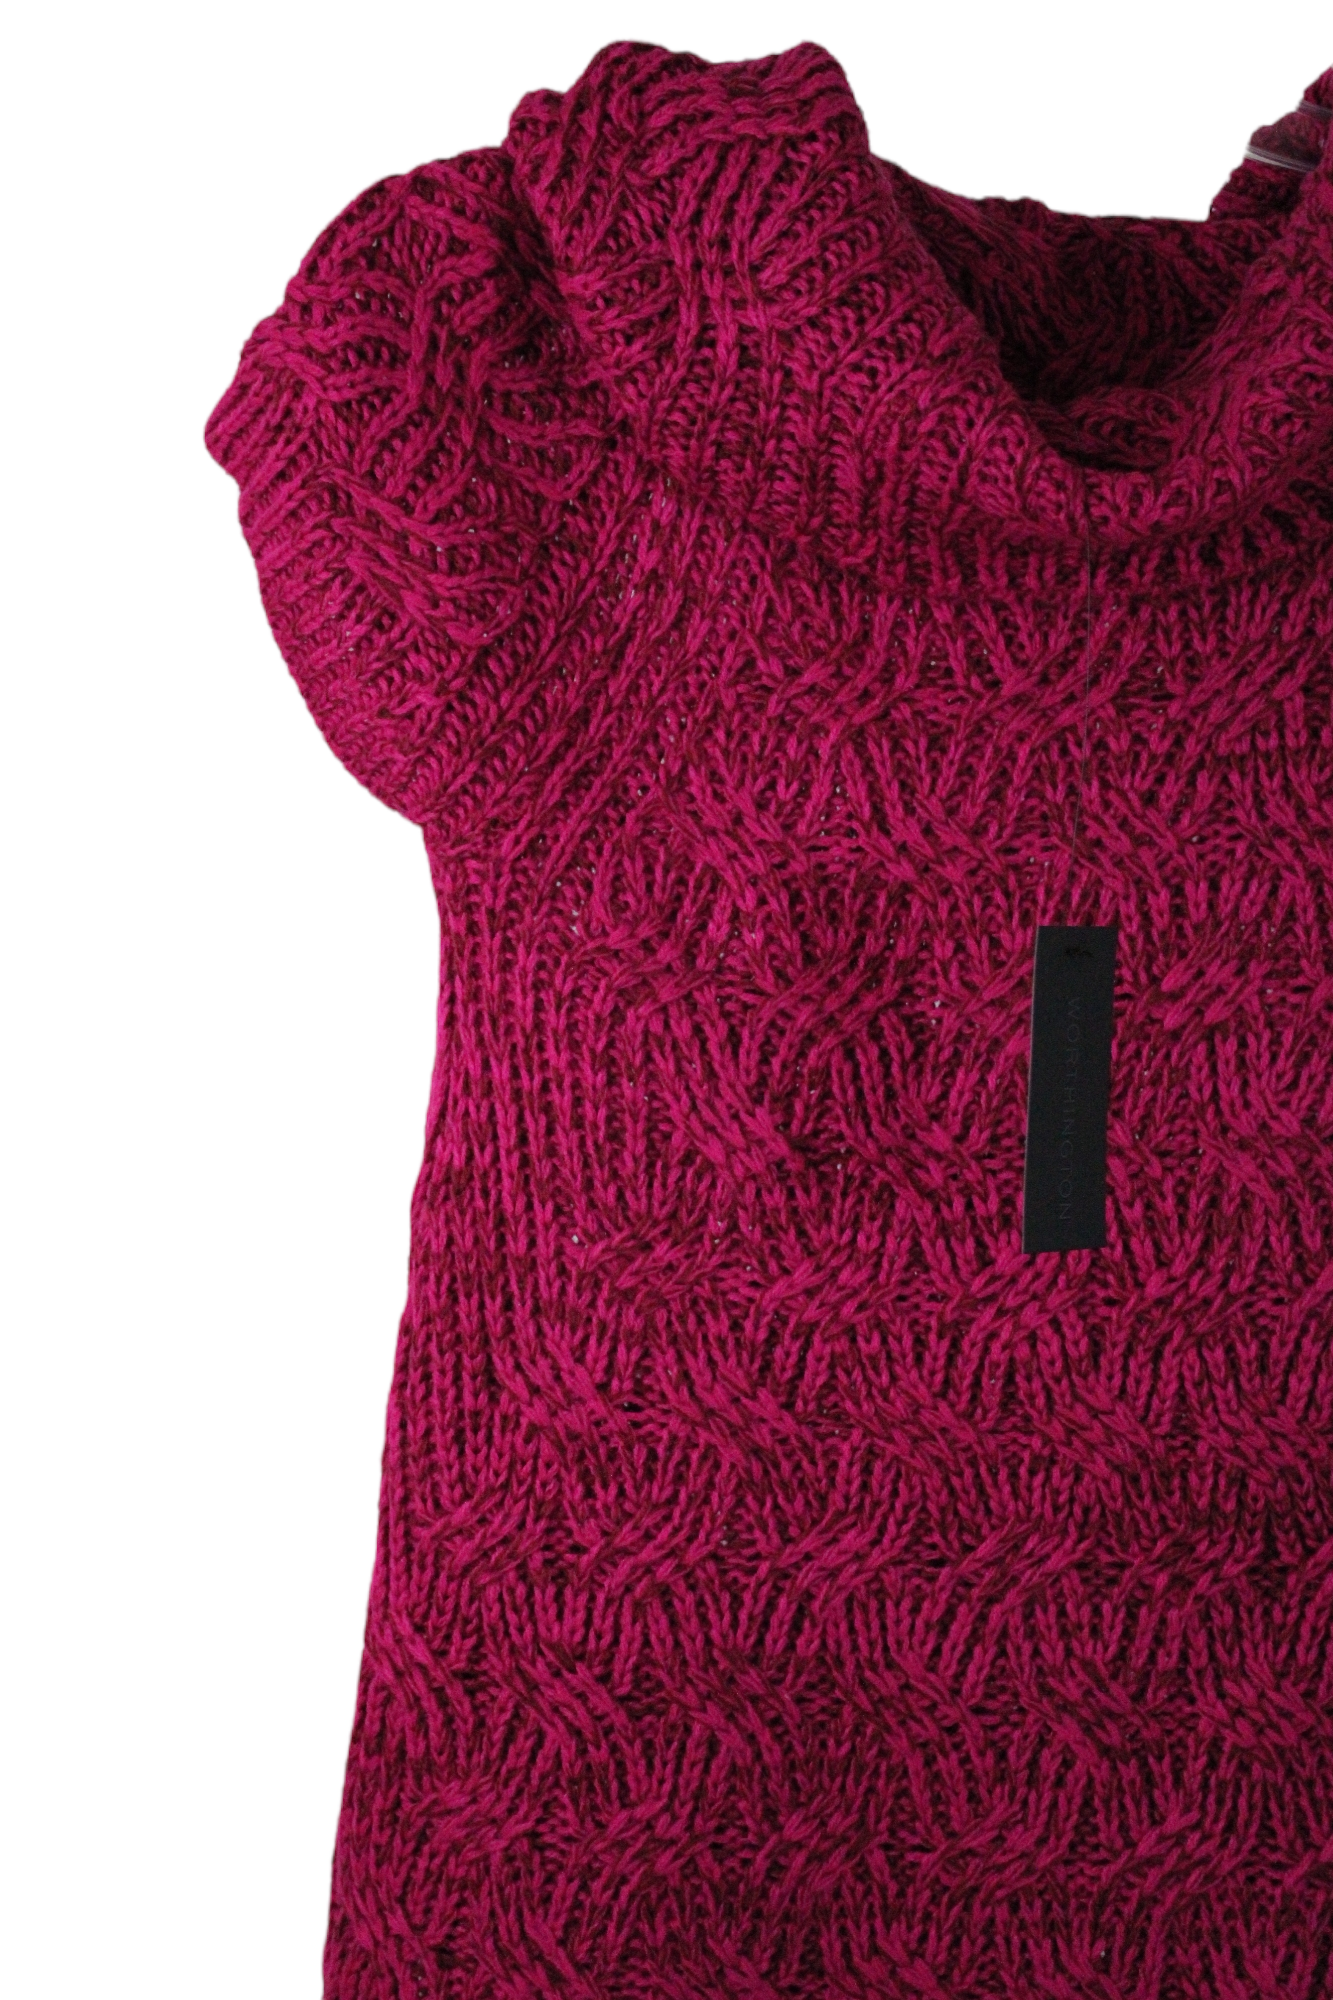 NEW Worthington Pink Sweater Dress | S